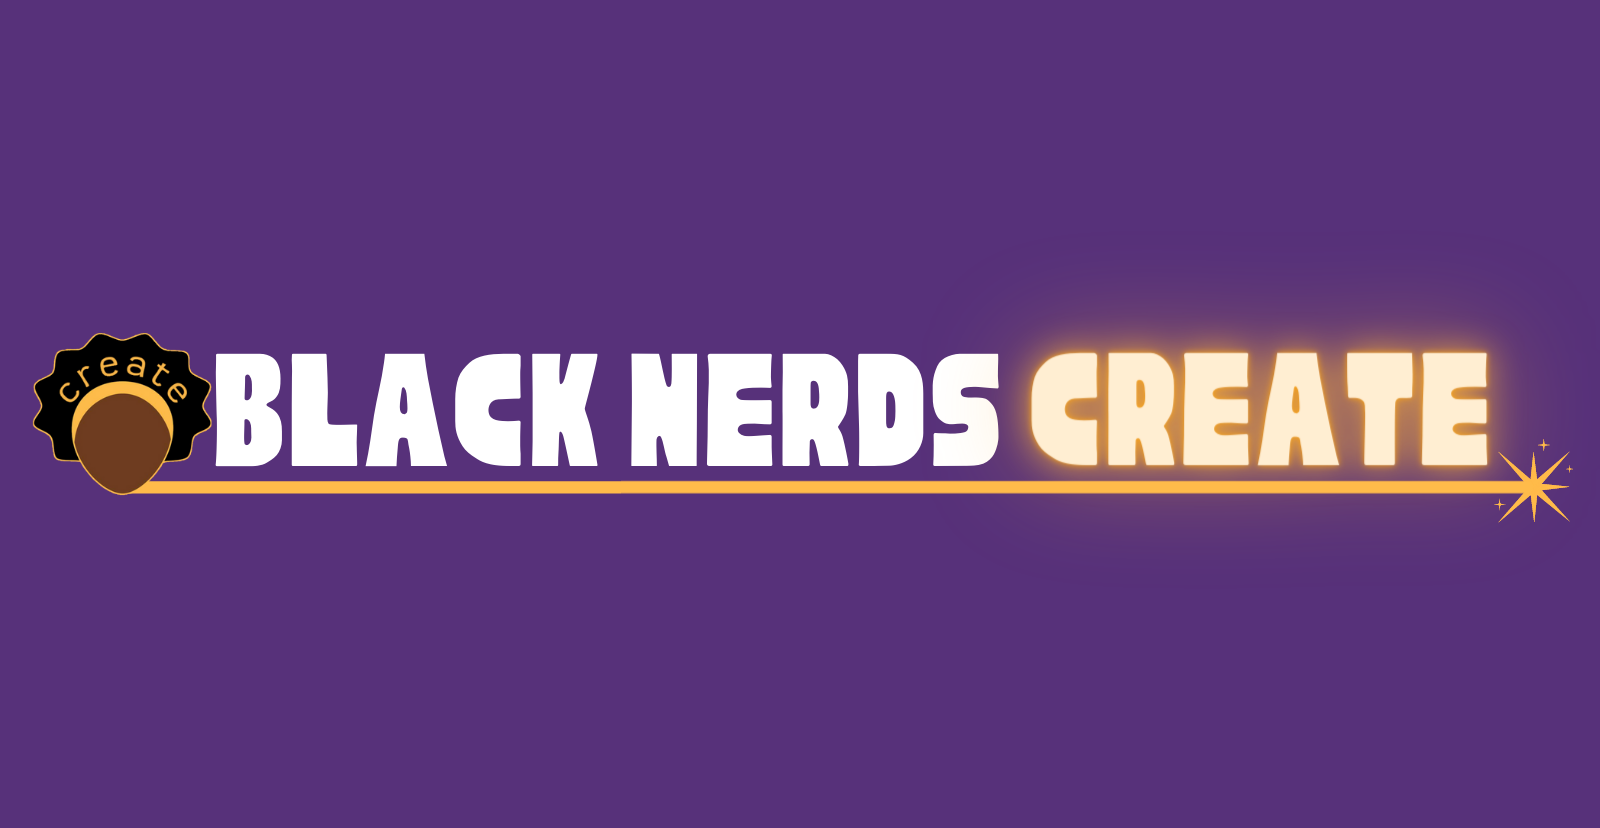 Black Nerds Create